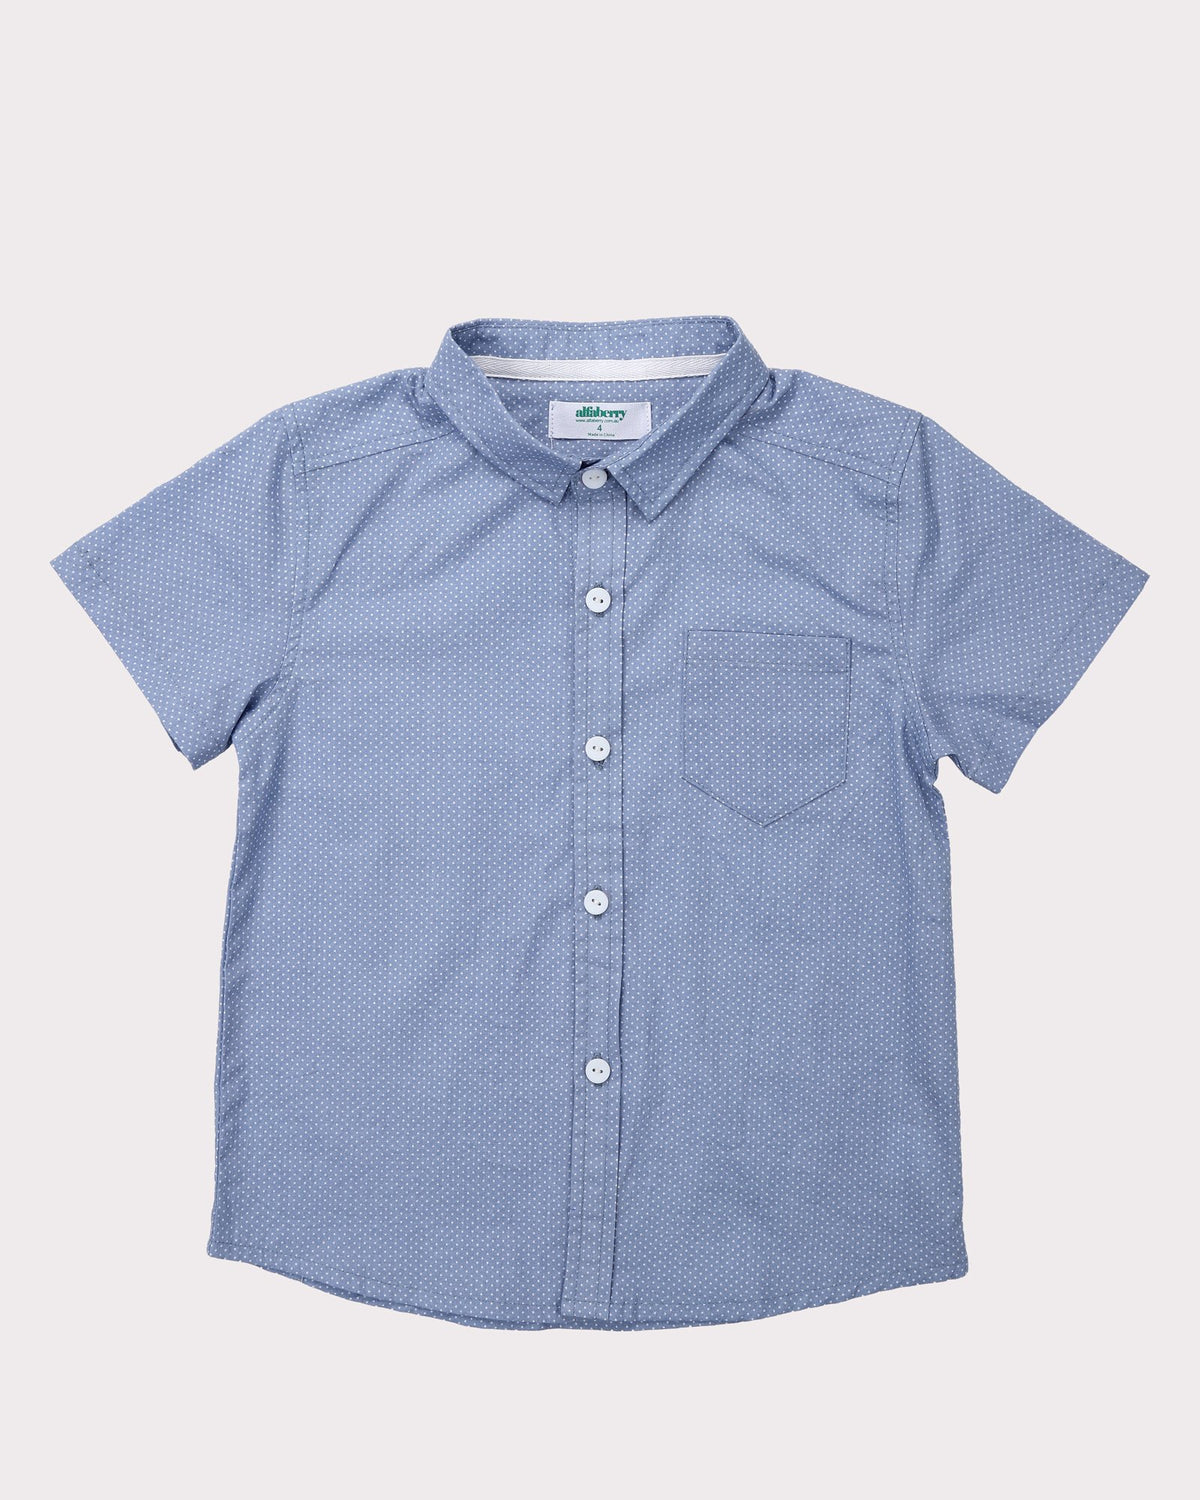 Pin Dot Shirt In Blue Front